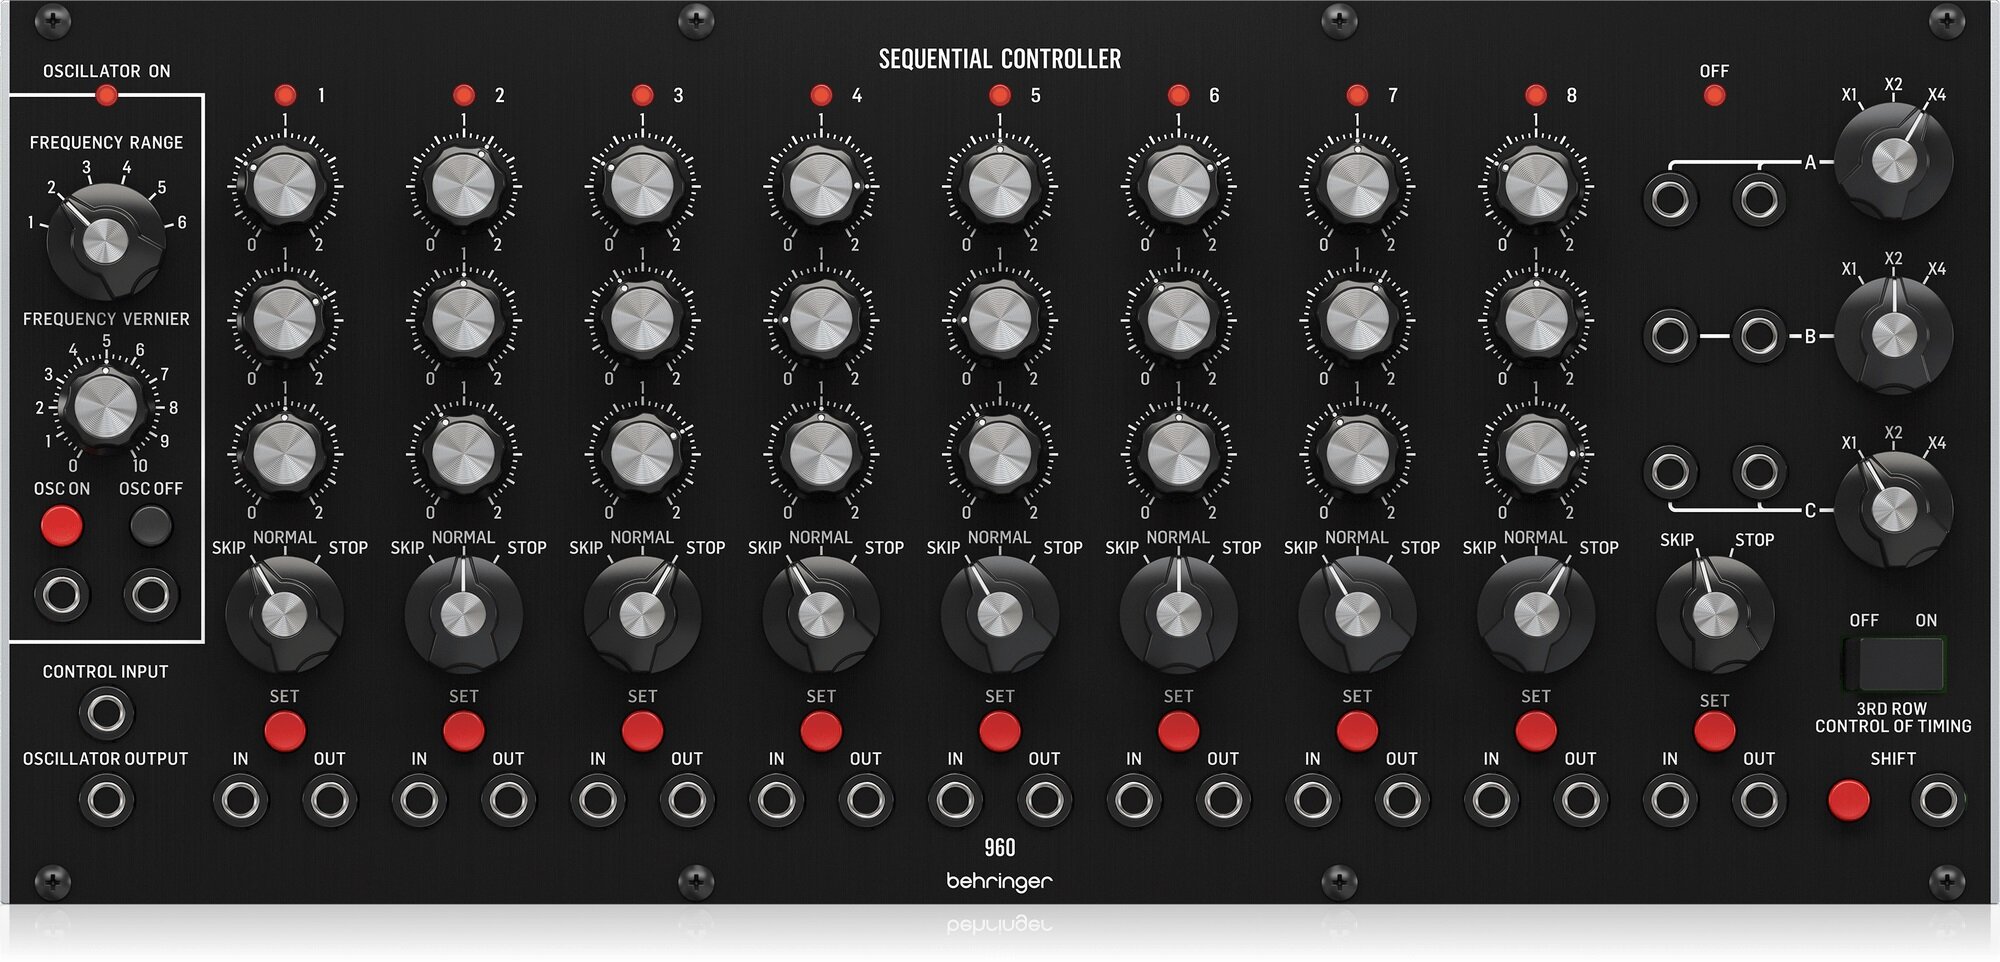 Синтезаторы Behringer 960 Sequential Controller